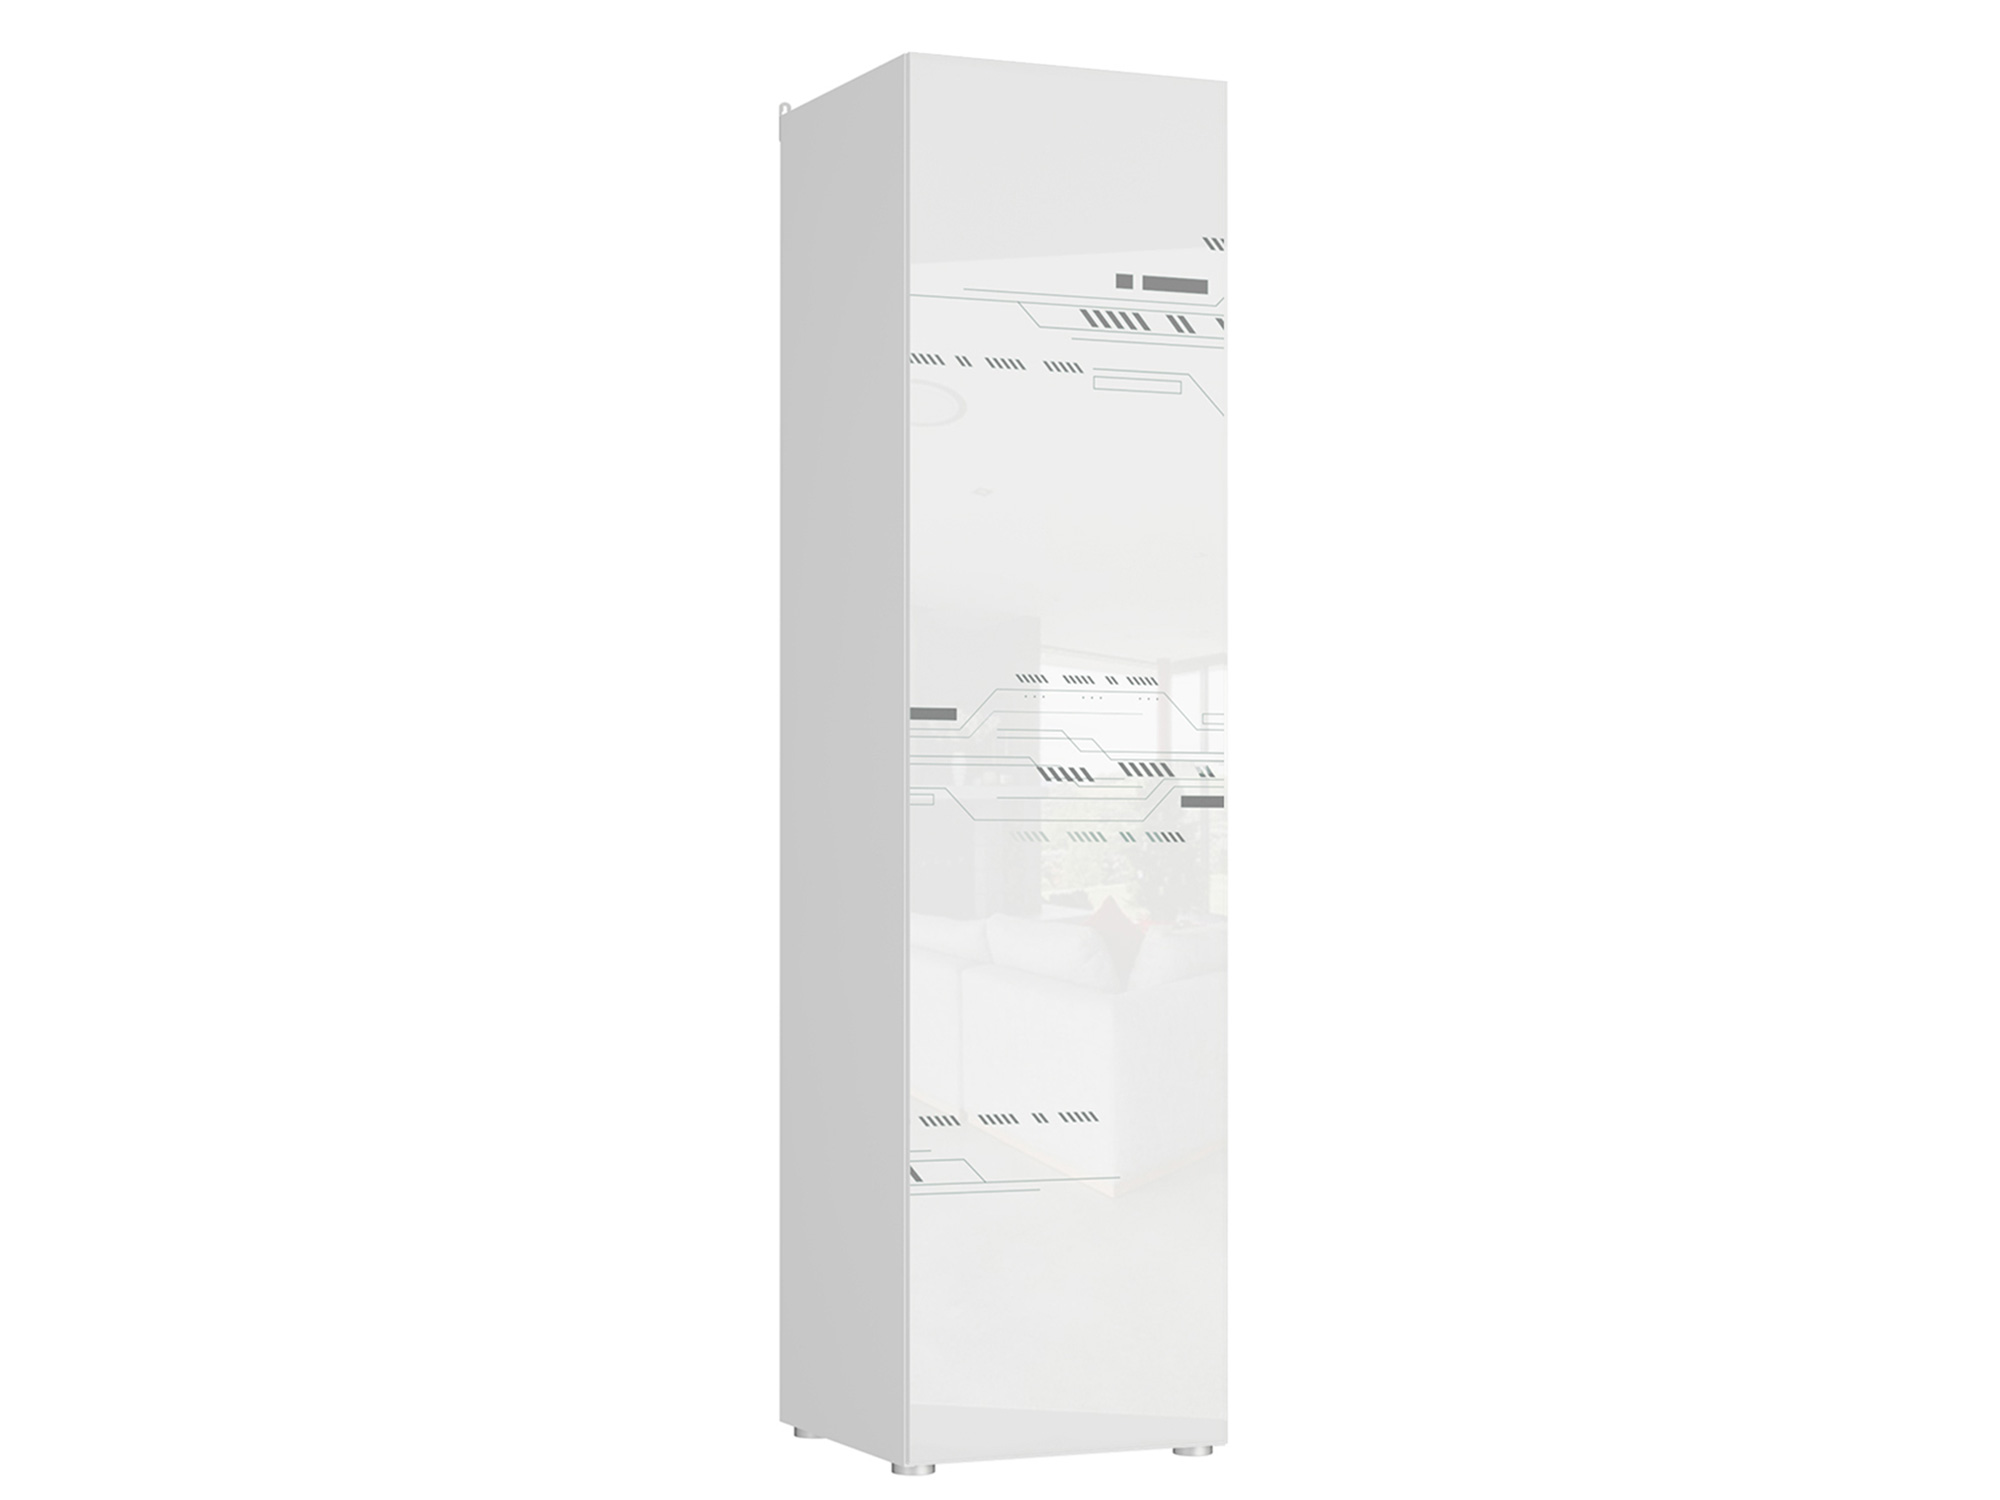 Шкаф 1-дверный Модерн (Modern) Техно Белый глянец, , Белый, МДФ, ЛДСП шкаф 1 дверный модерн modern стиль белый глянец белый мдф лдсп